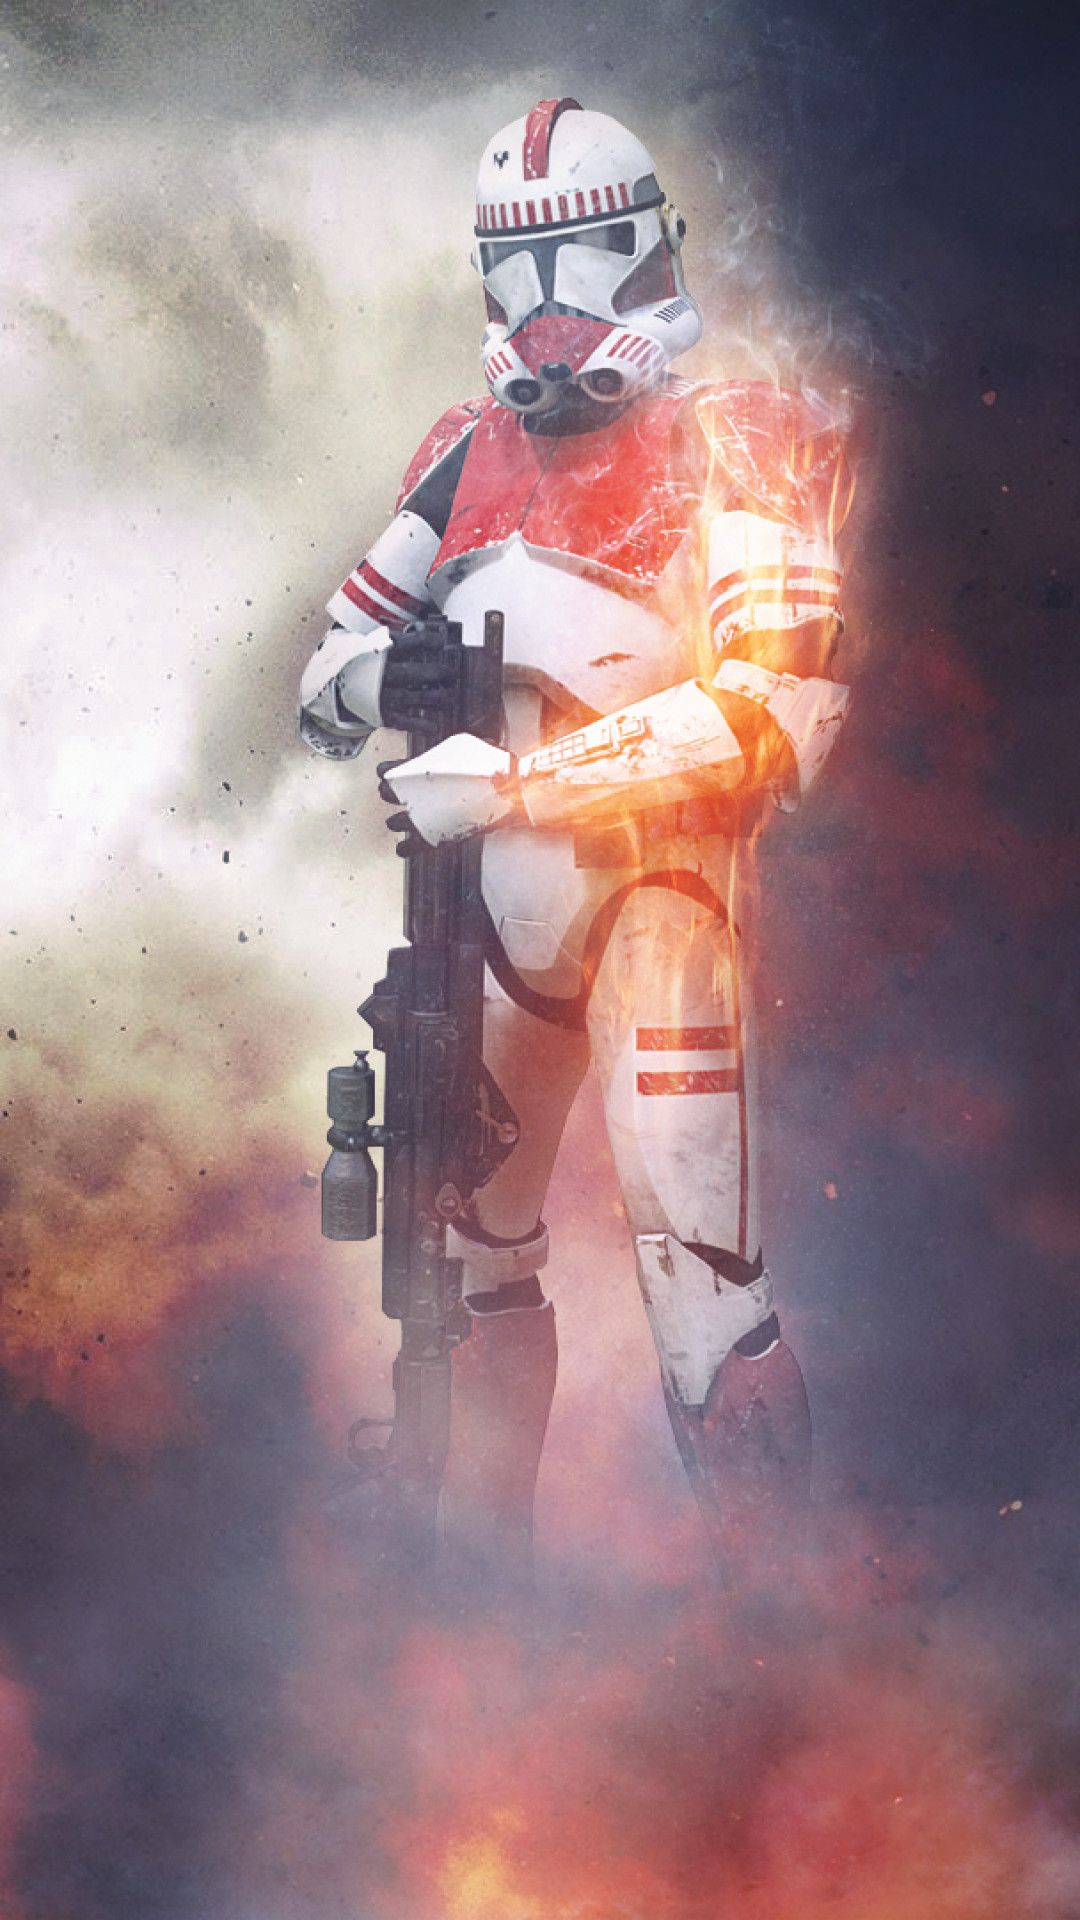 1080x1920 Clone Trooper iPhone Wallpaper (65 images) | Star wars